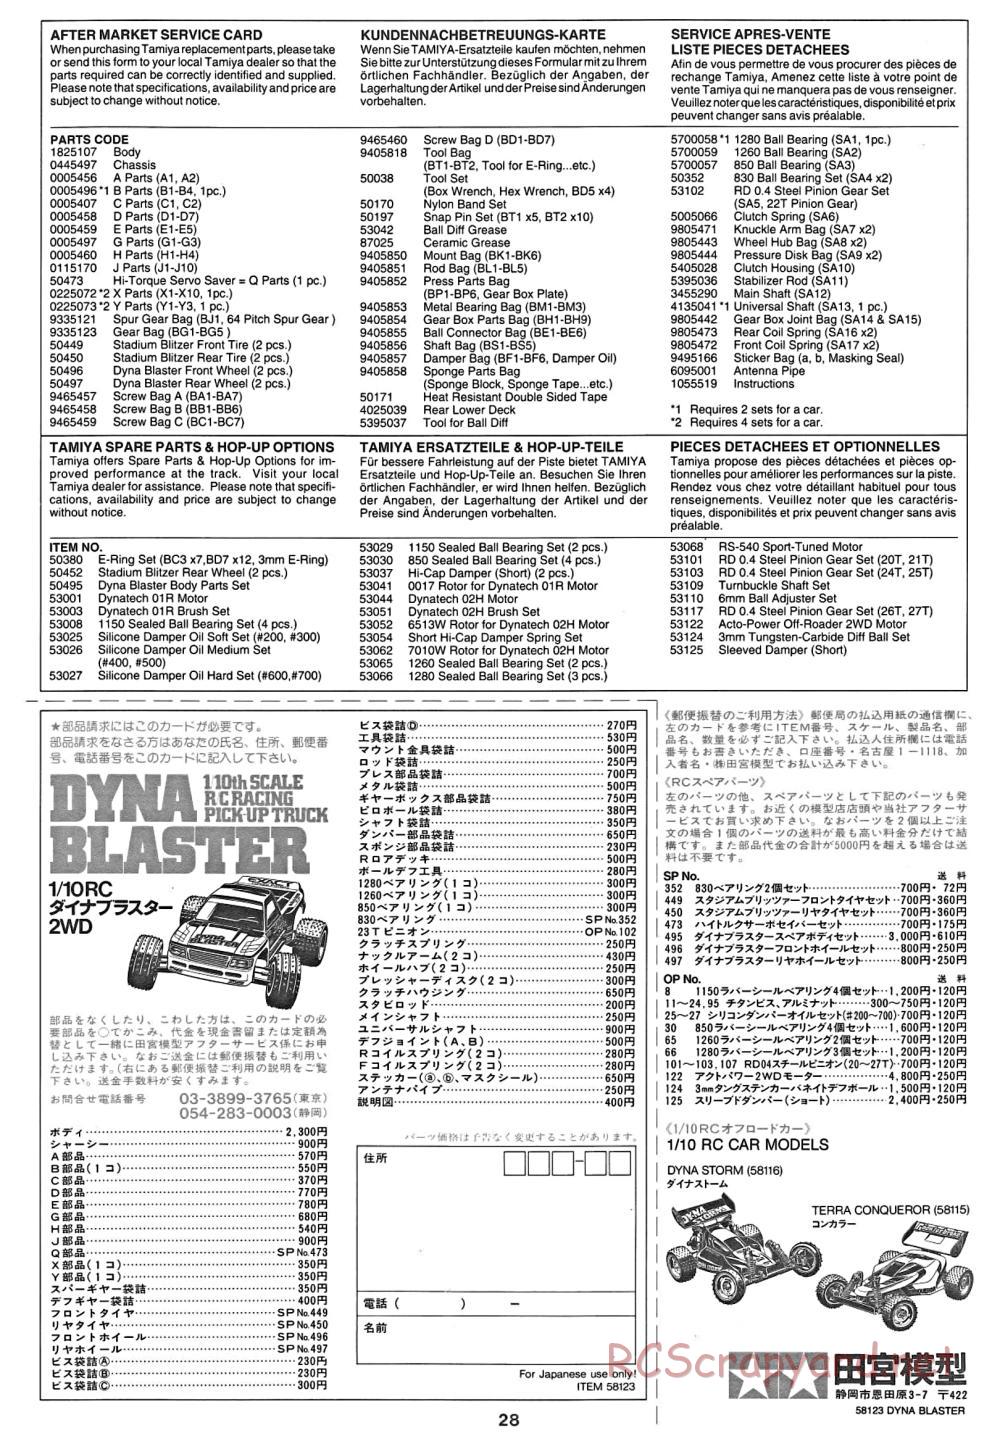 Tamiya - Dyna Blaster Chassis - Manual - Page 28